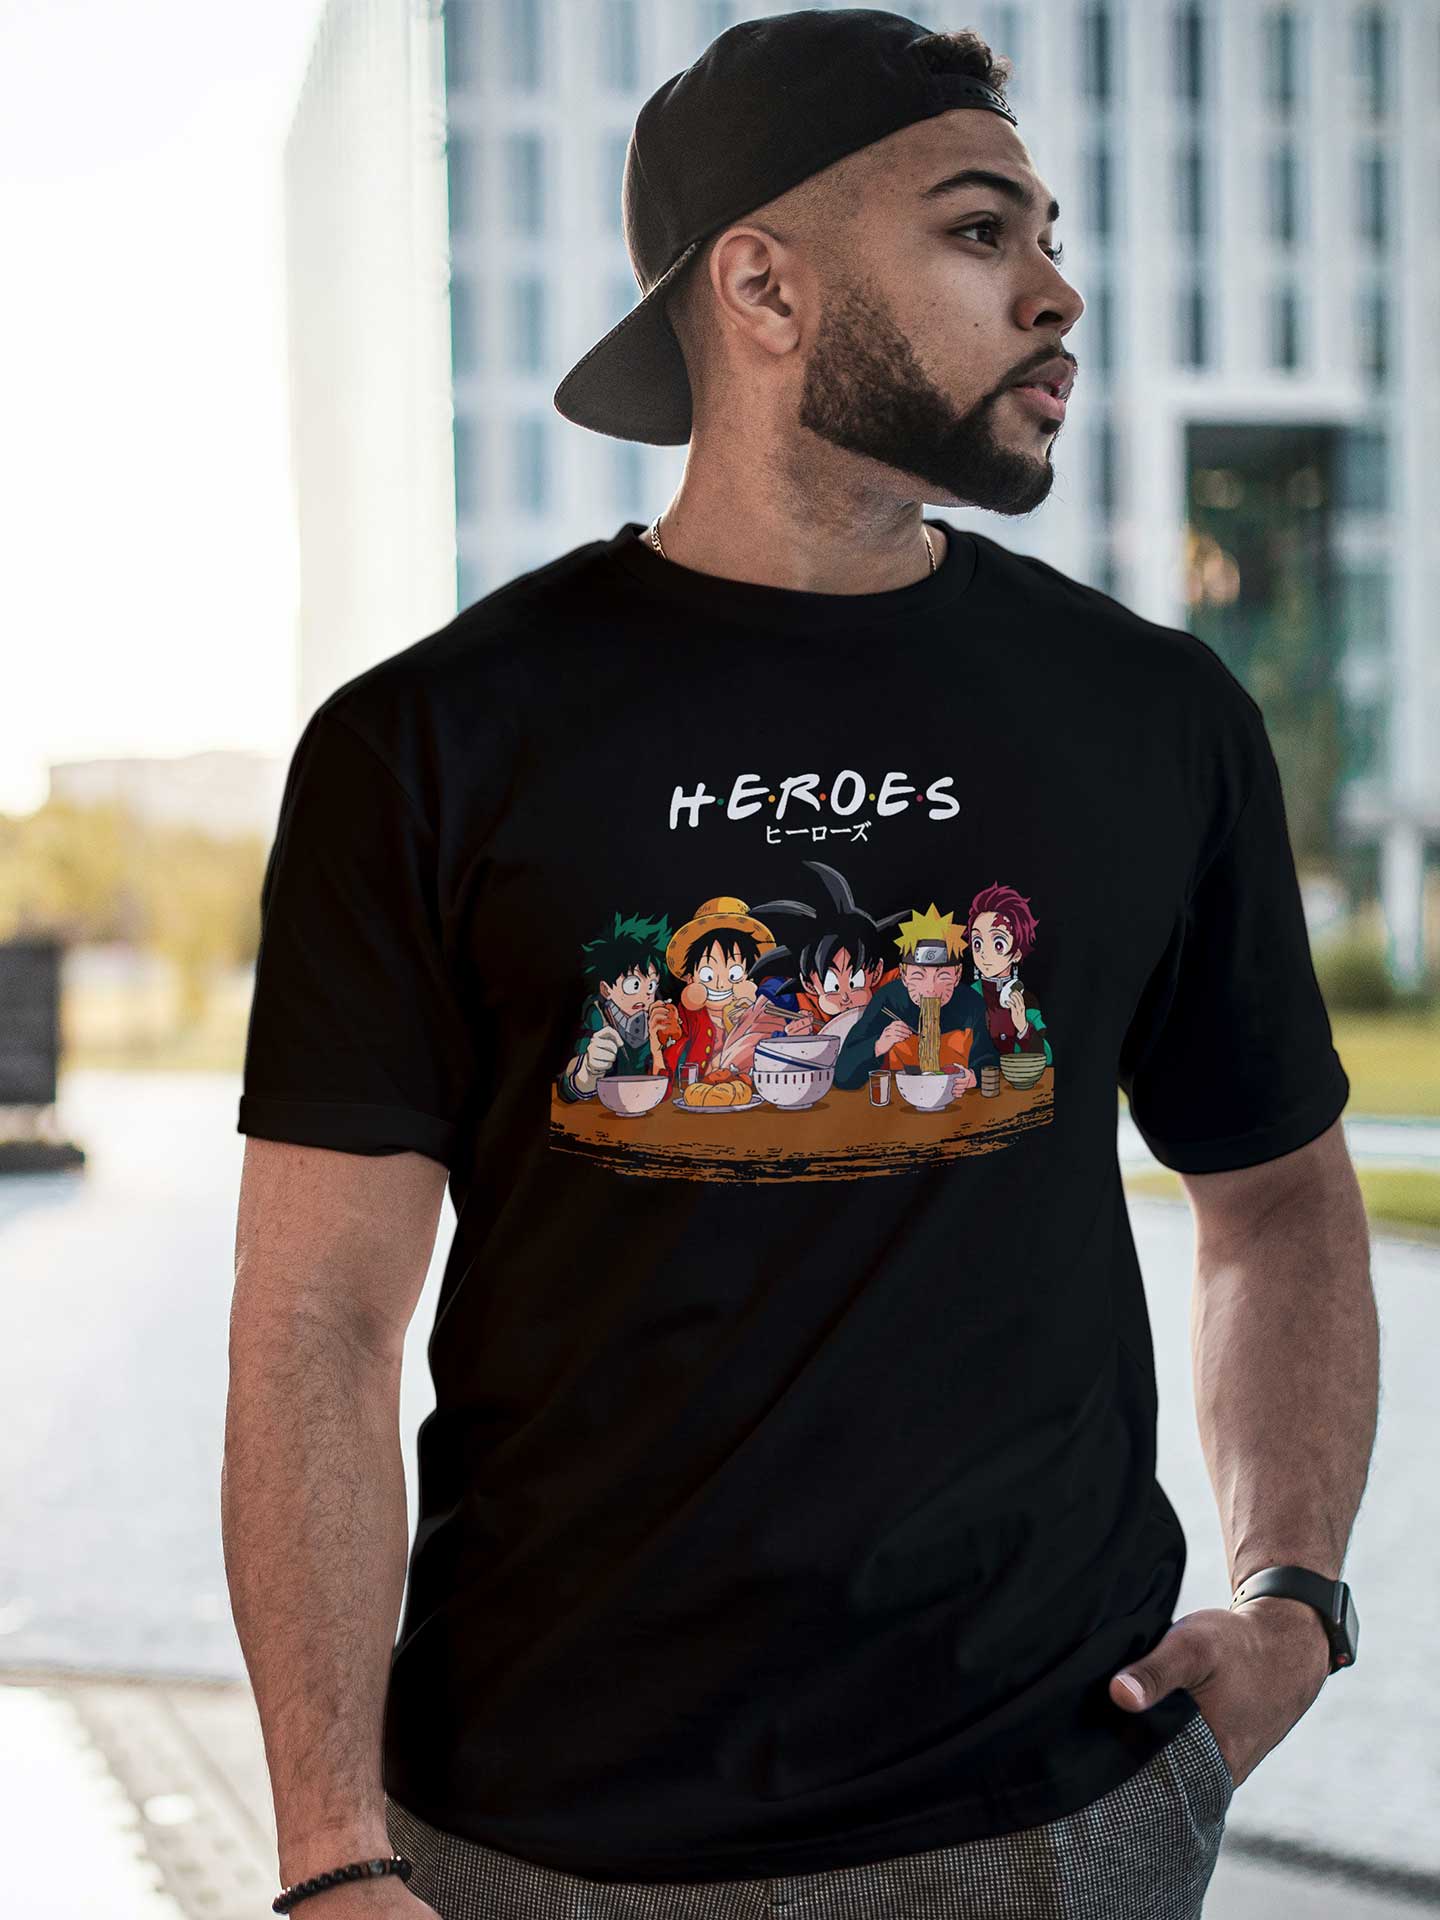 Men's Black Heroes Printed T-shirt